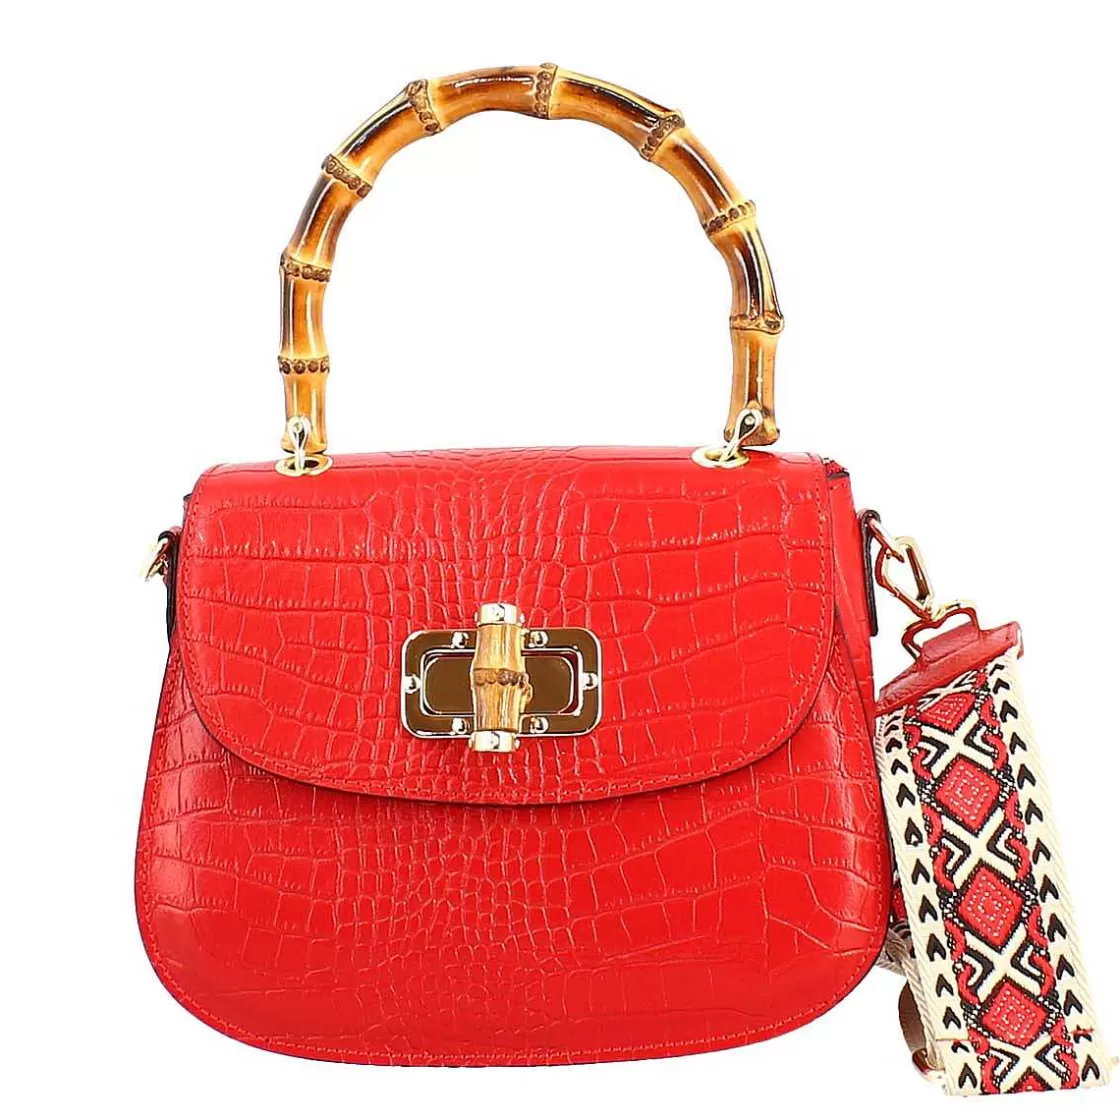 Leonardo Handmade Women'S Handbag In Red Leather With Removable Shoulder Strap Fashion